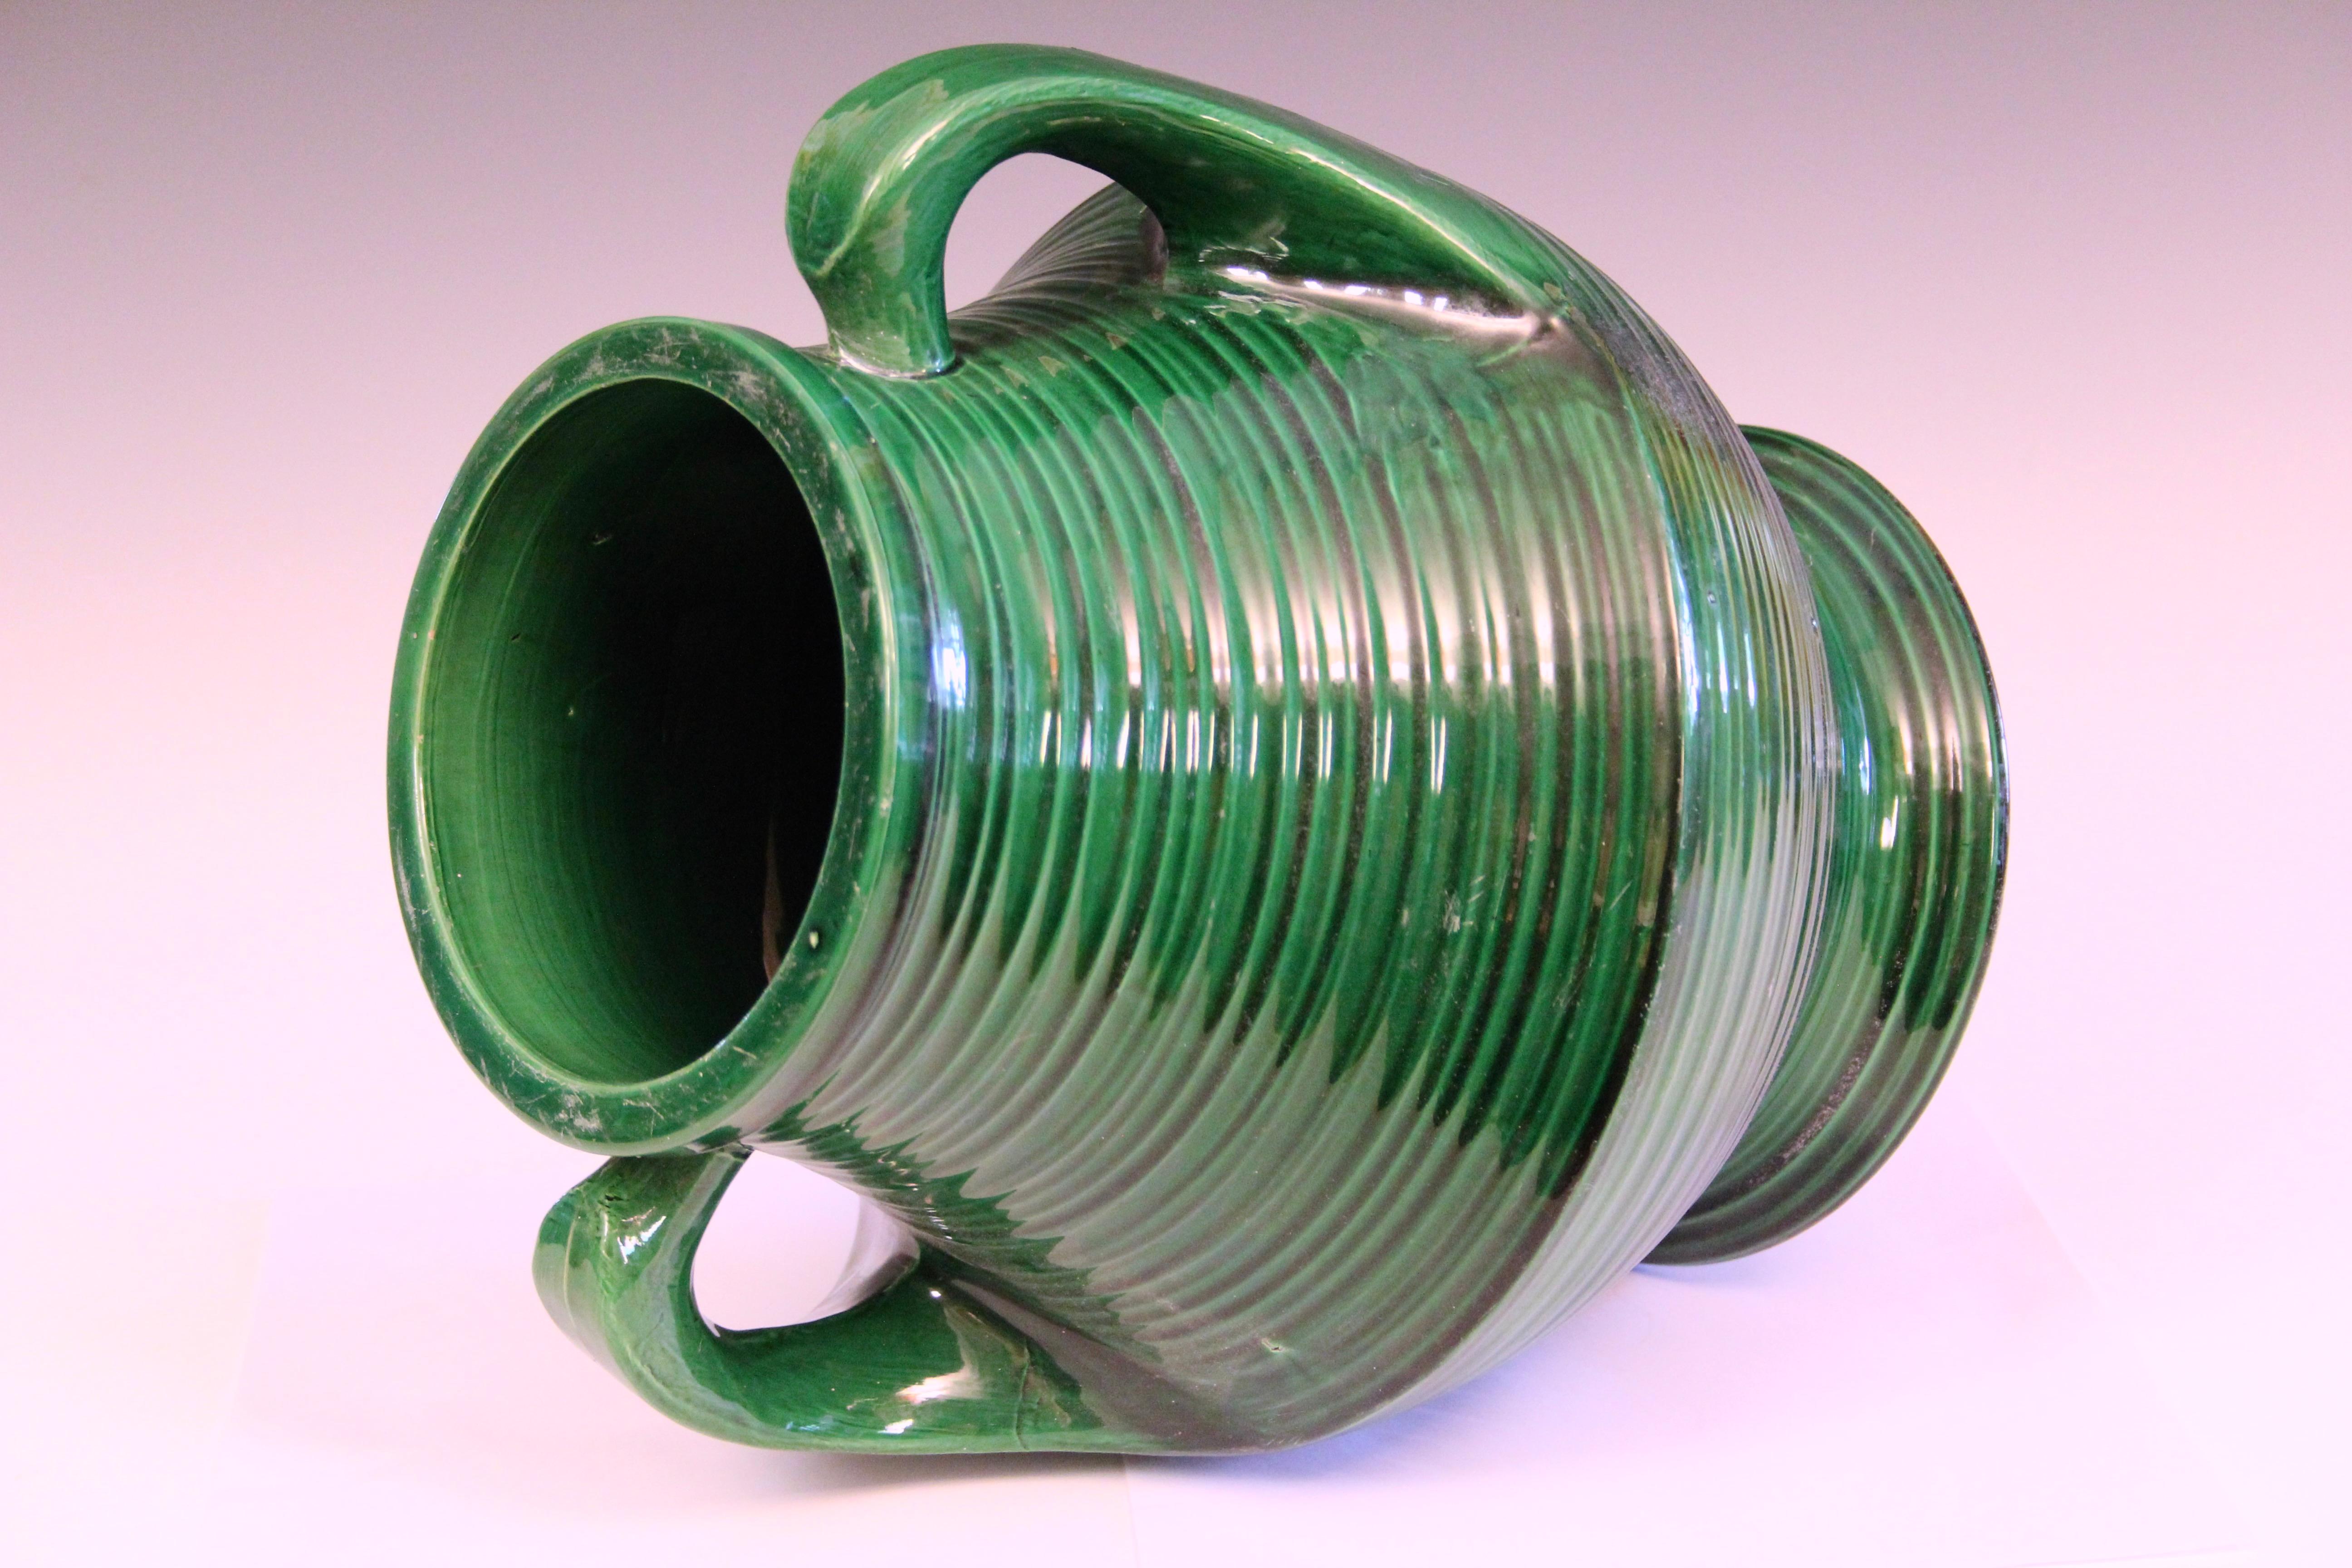 Japanese Antique Awaji Pottery Vase Art Deco Swirl Green Large Monochrome Handles For Sale